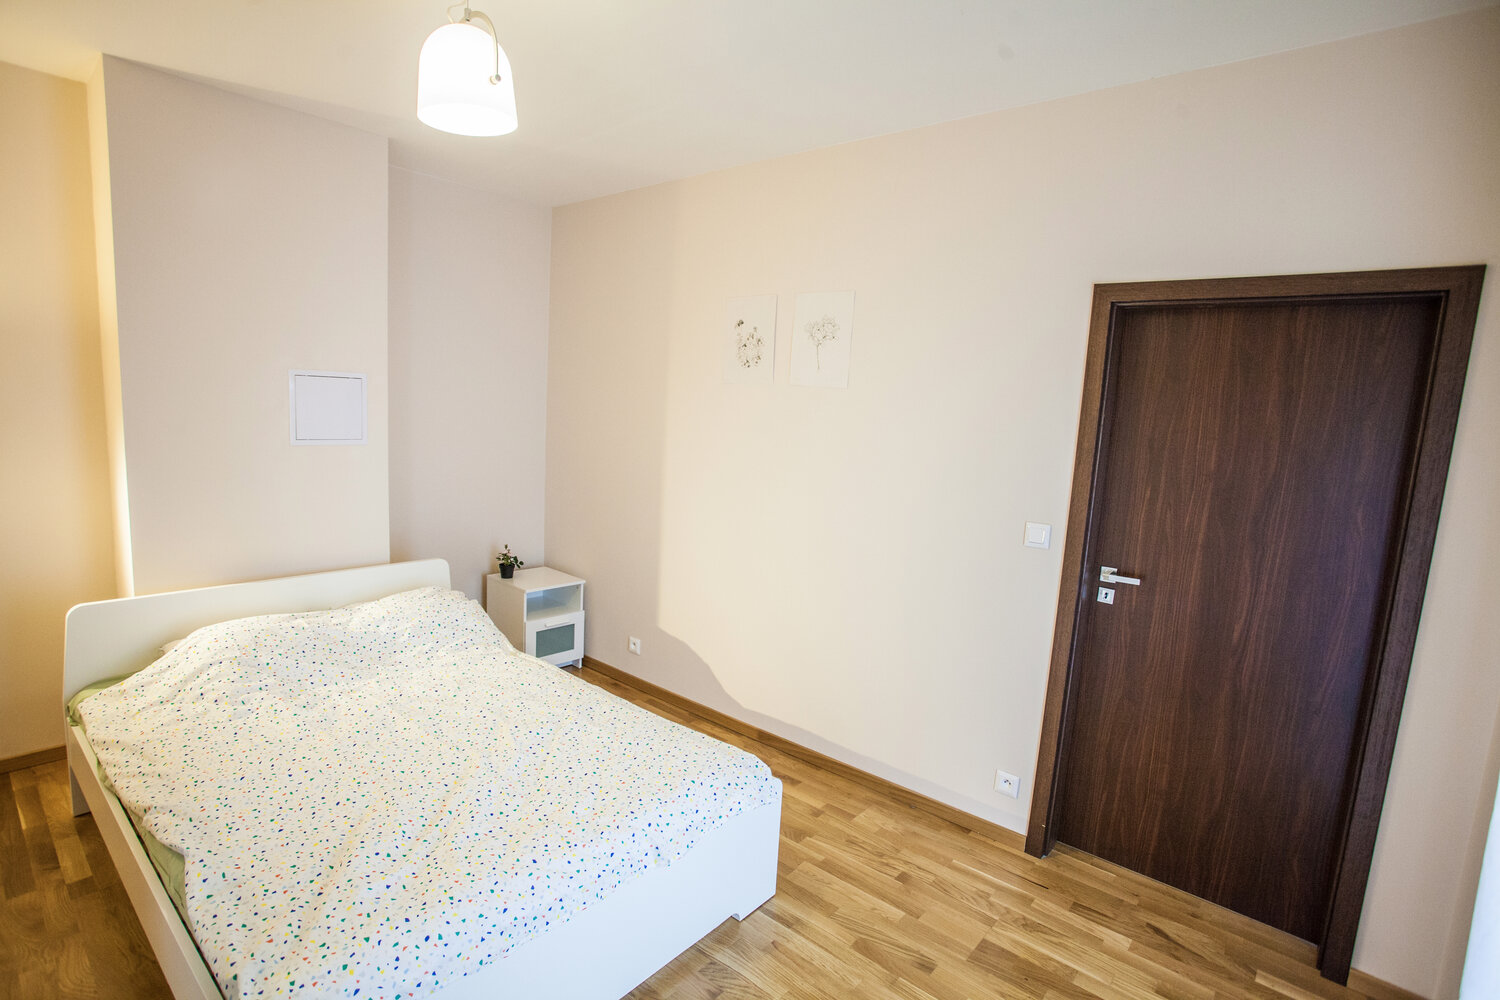 2+KK apartment at Žižkov in Prague with no extra commission 16